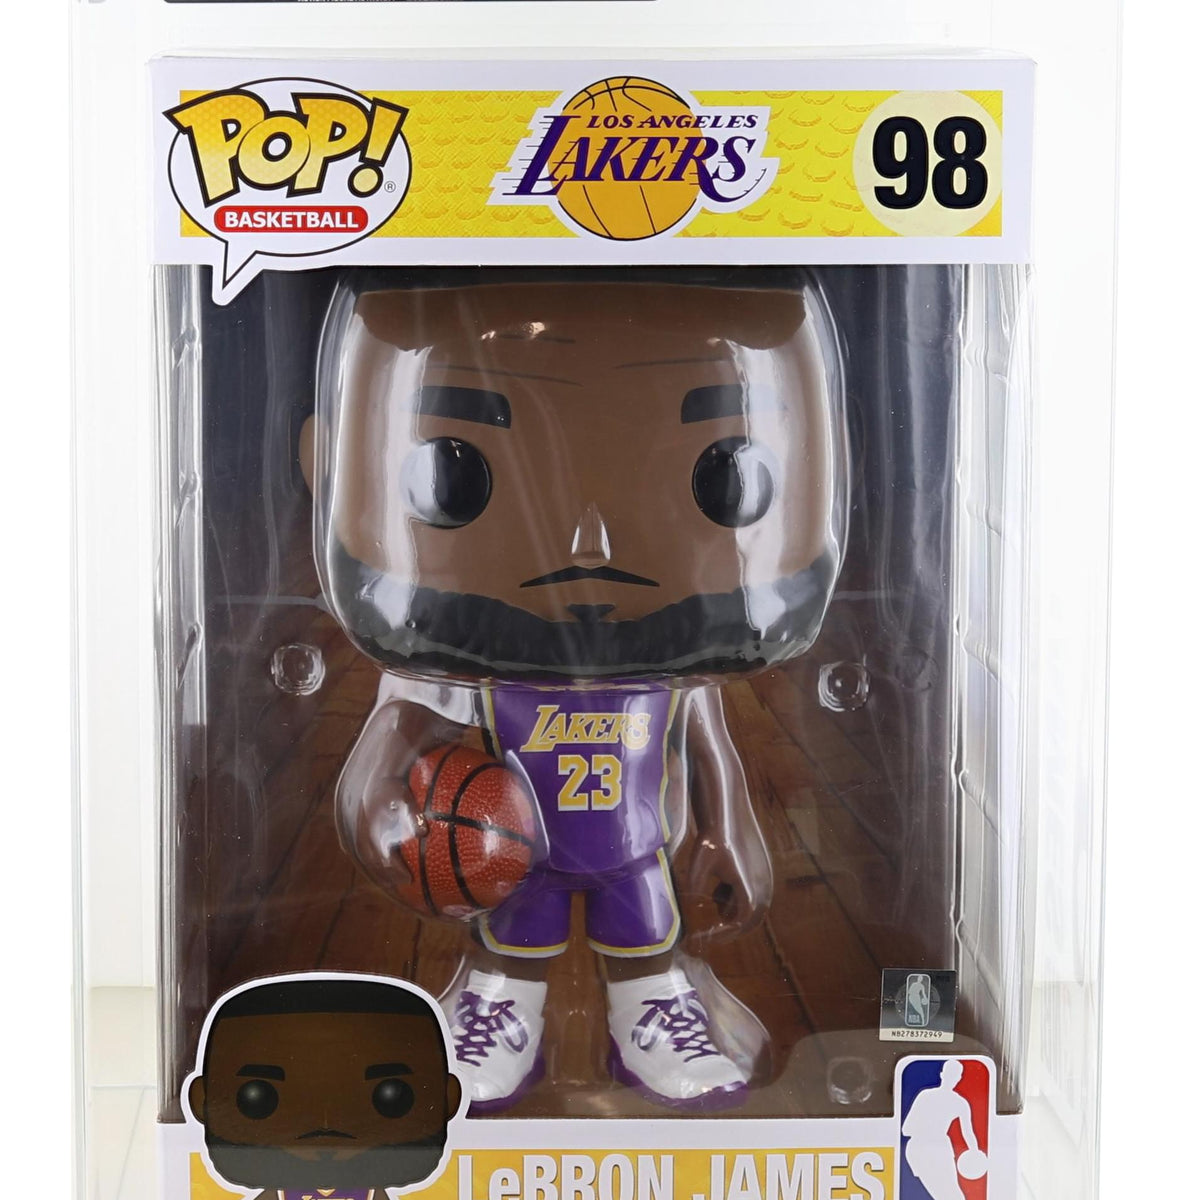 NBA Lakers LeBron James (Purple Jersey) 10-Inch Funko Pop! Vinyl Figure